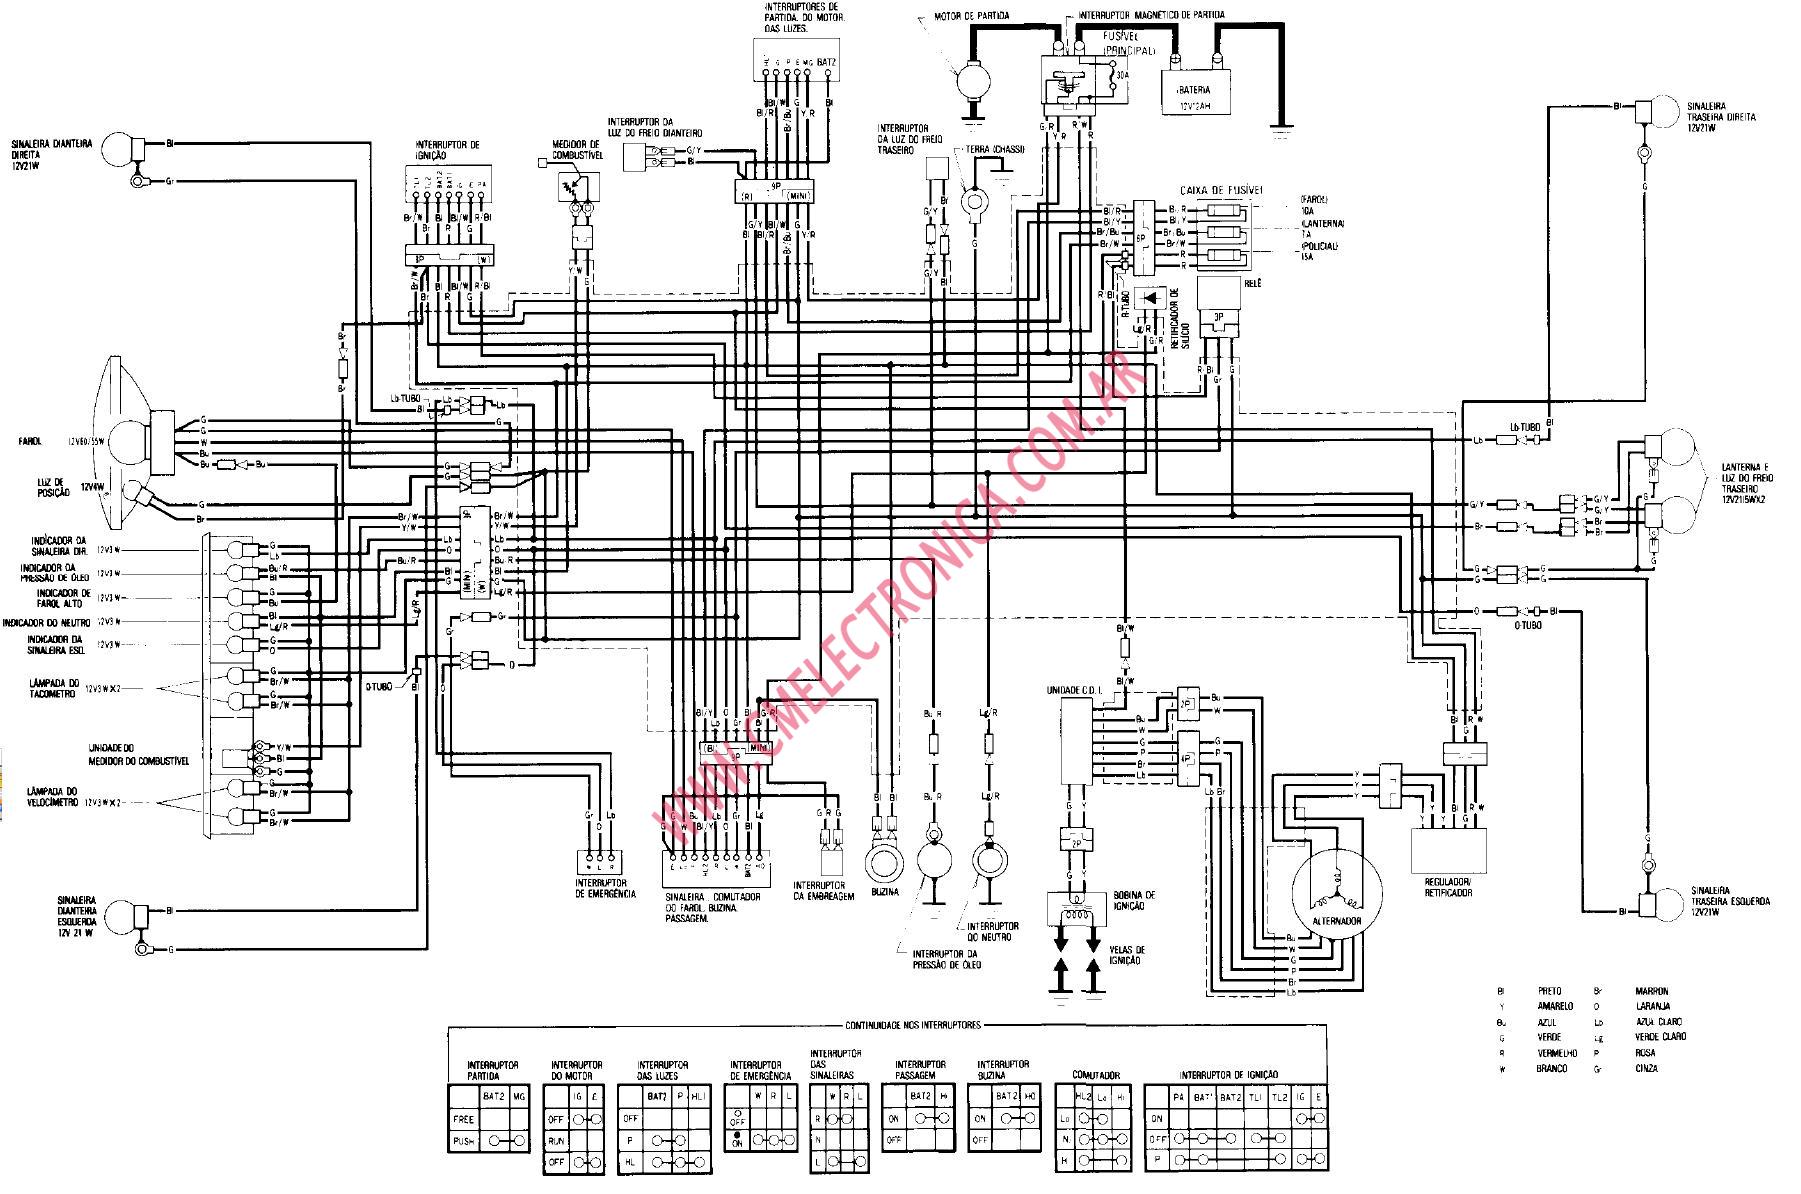 [DIAGRAM] Honda Shadow 400 Wiring Diagram FULL Version HD Quality